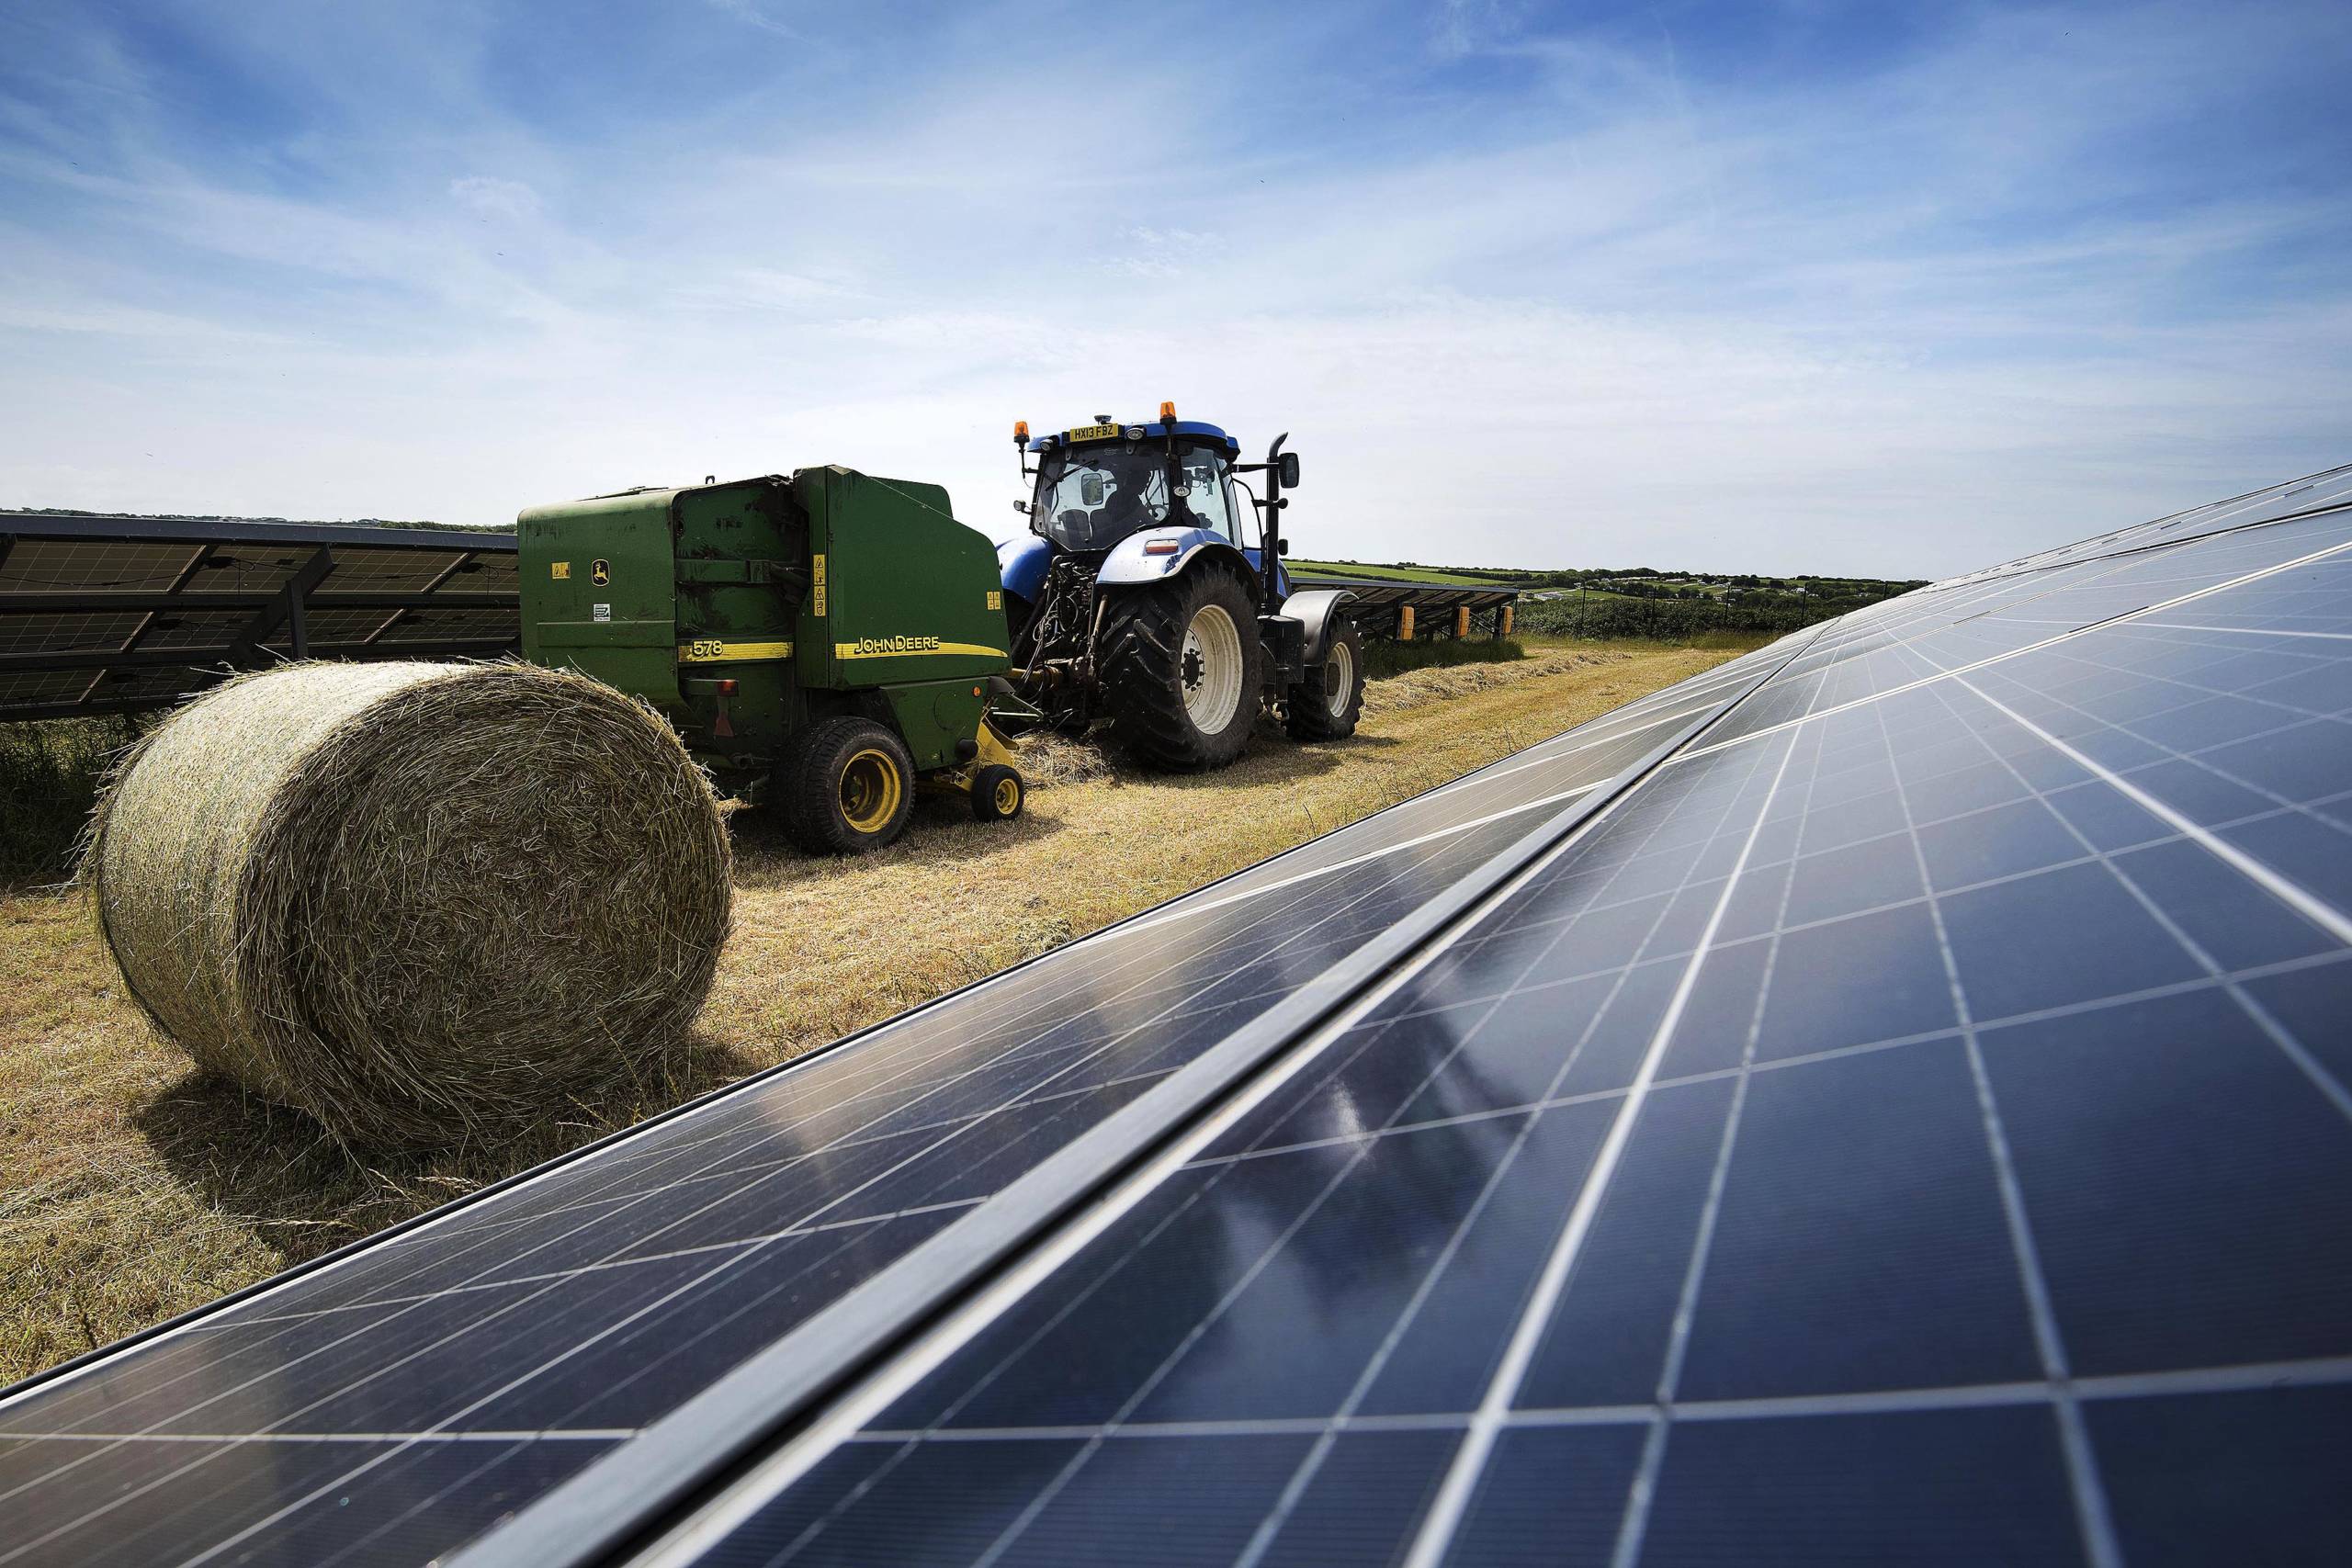 Tractor bailing on solar farm